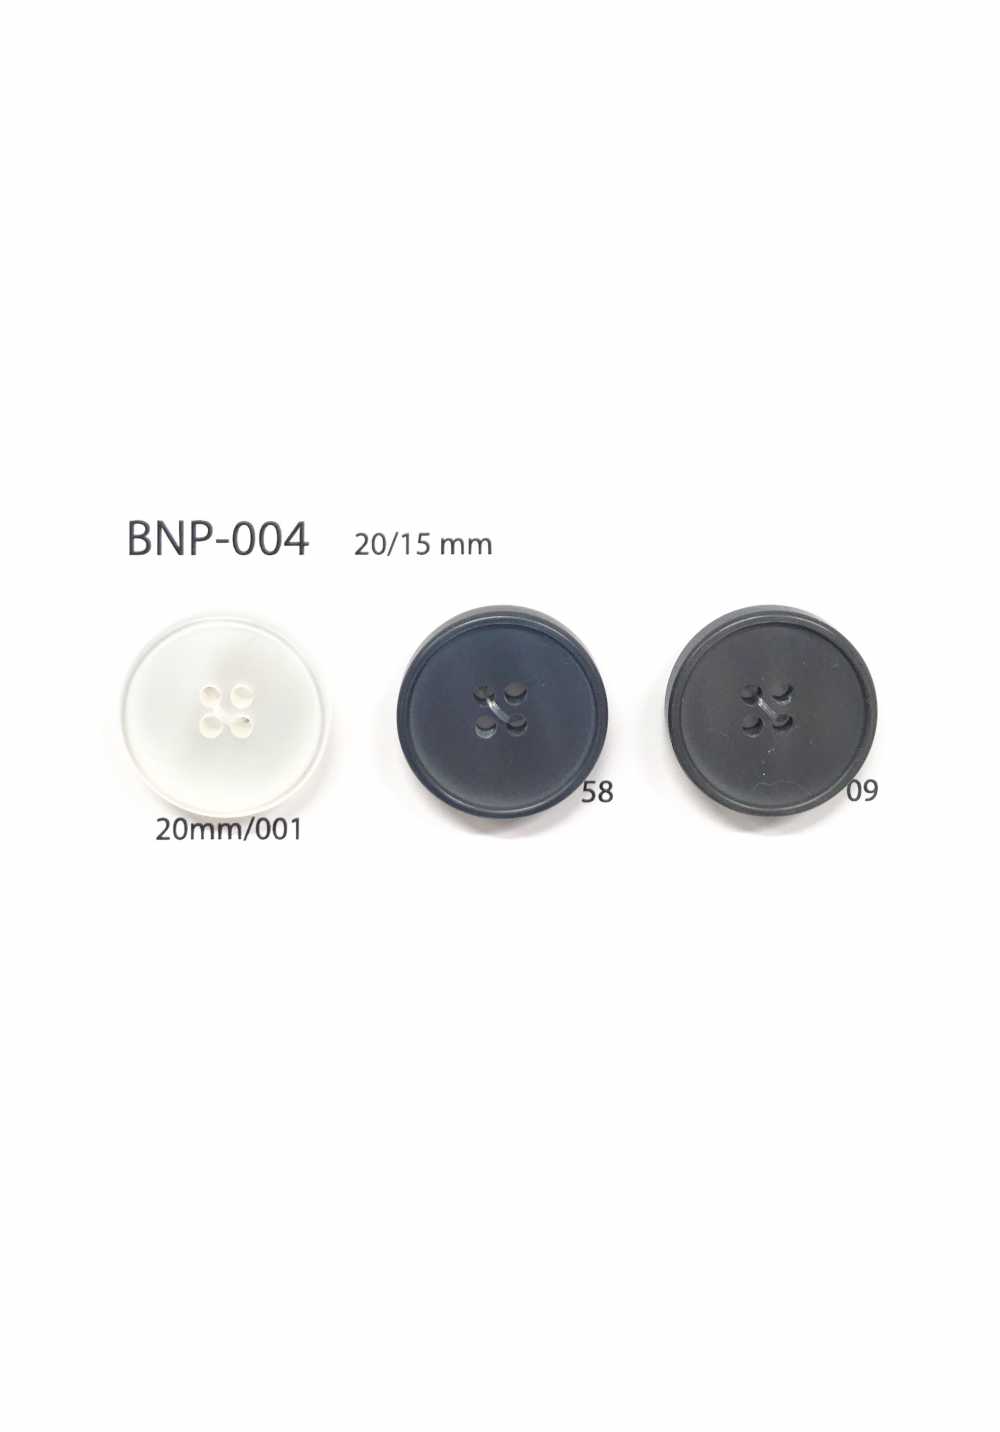 BNP-004 Biopolyester 4-hole Button IRIS